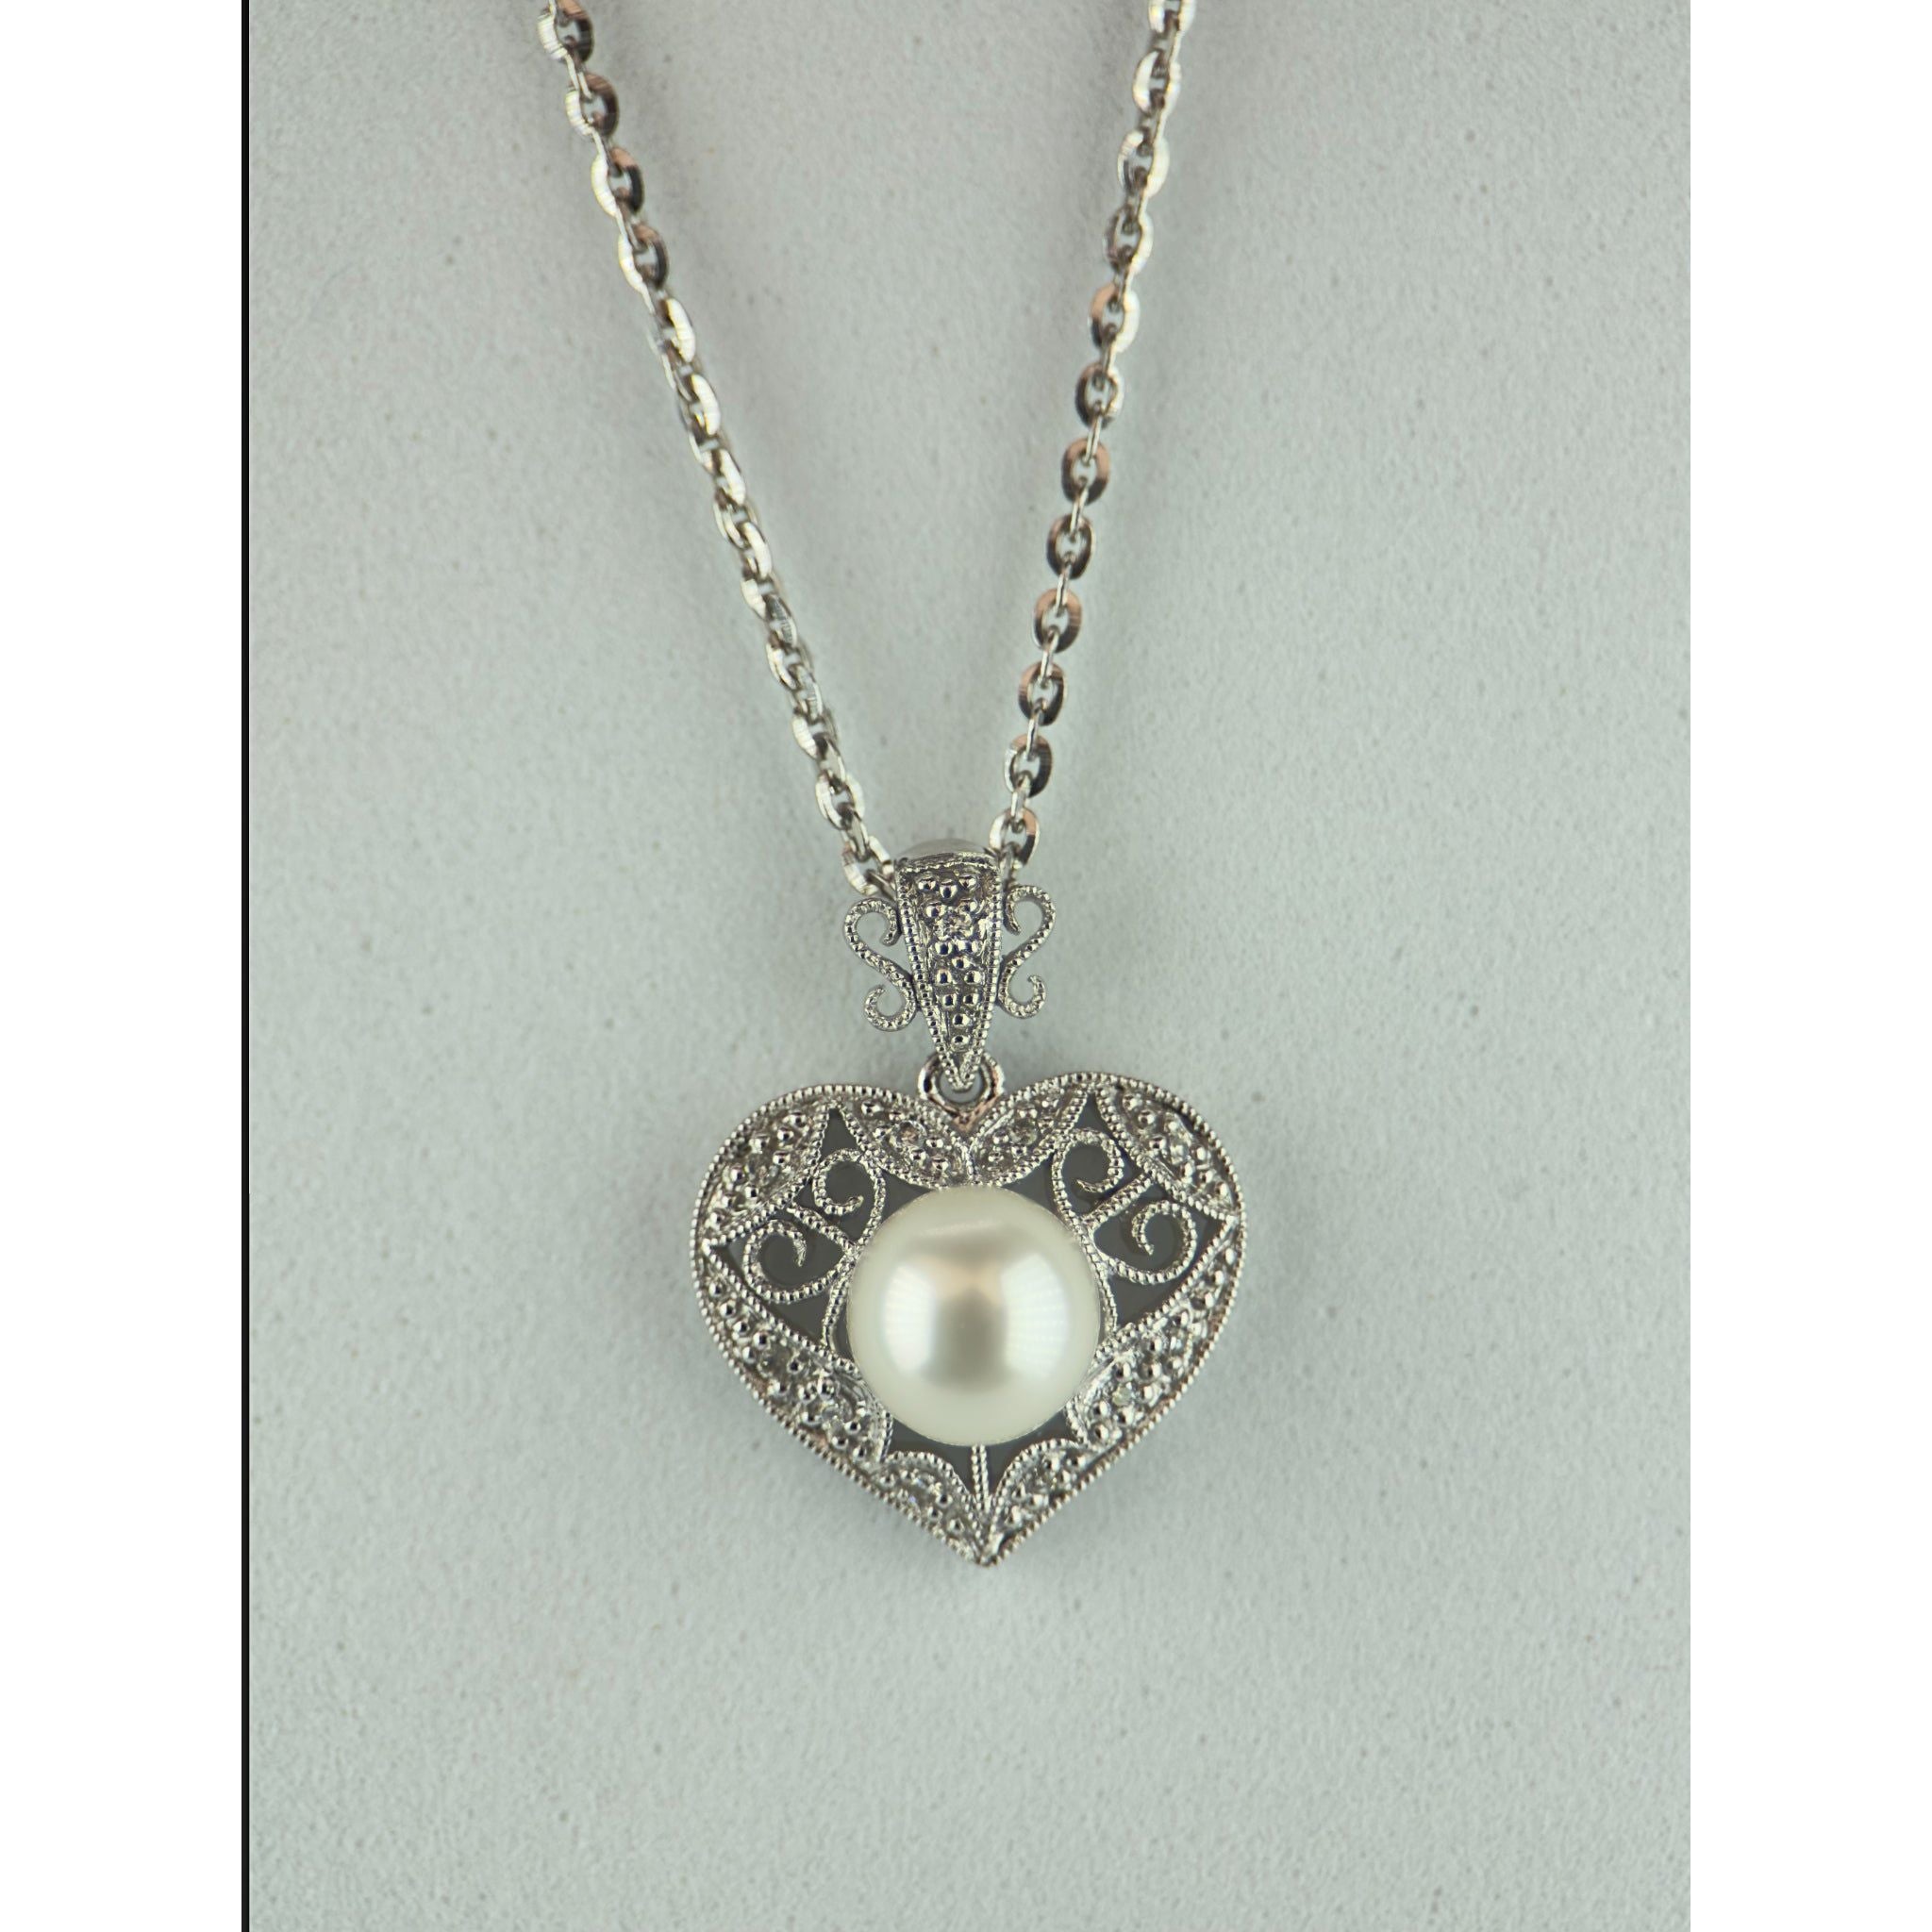 DR2265 - 14K White Gold - Diamond - Pendant and Chain - Genuine Pearl